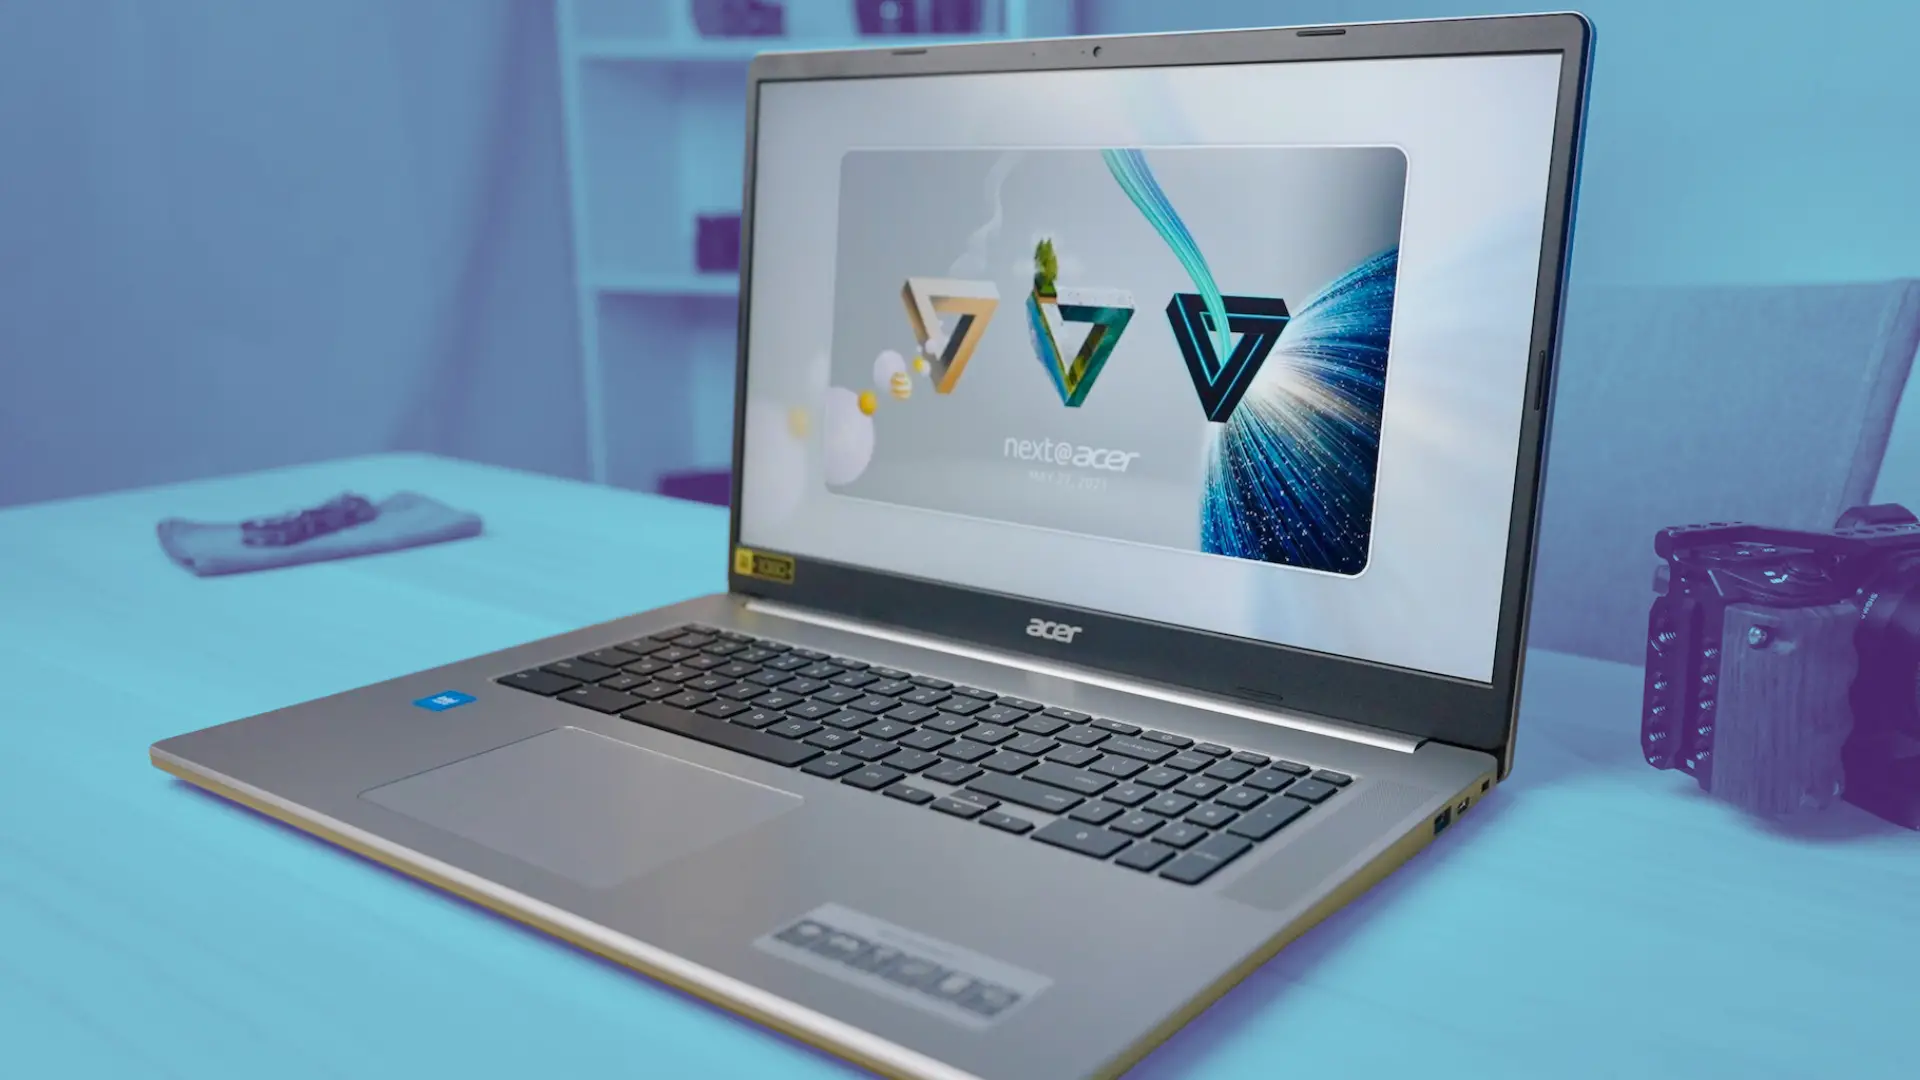 Save big on a big Chromebook: Get the Acer 317 for under $300